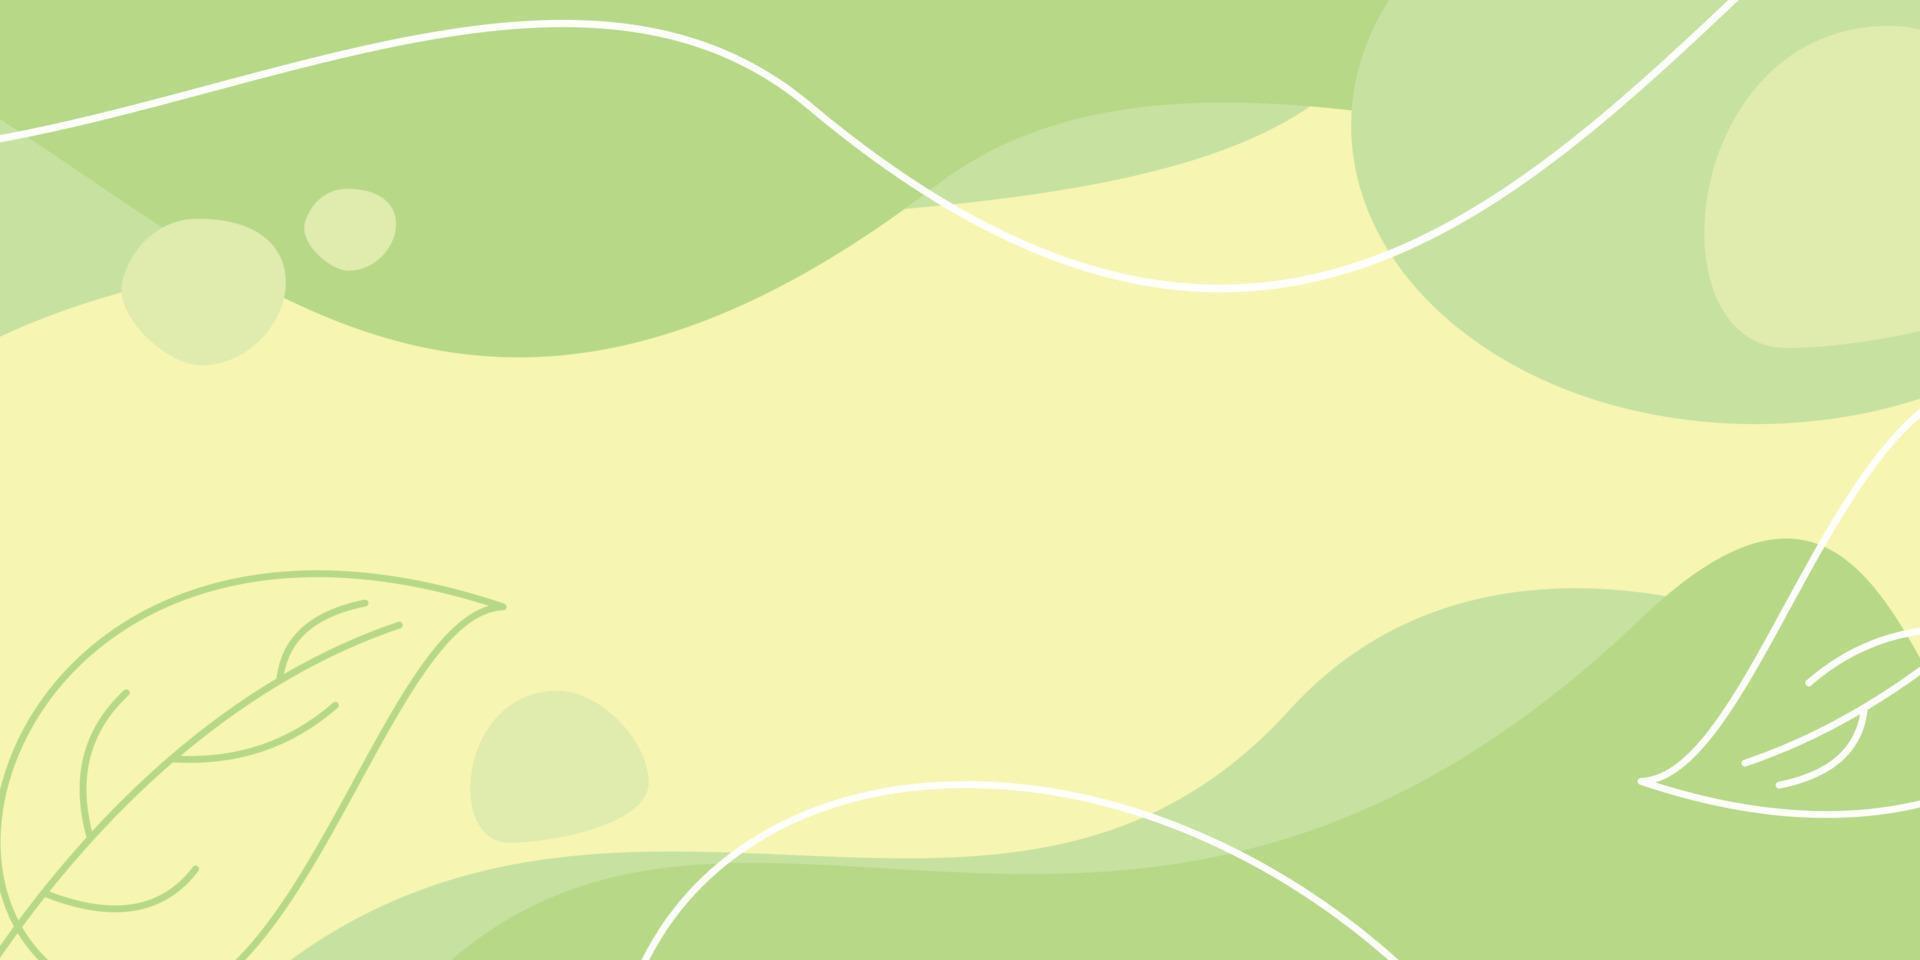 tierra día antecedentes verde color resumen formas, olas y hojas modelo con gratis espacio para texto. modelo para pancartas, carteles, social medios de comunicación vector